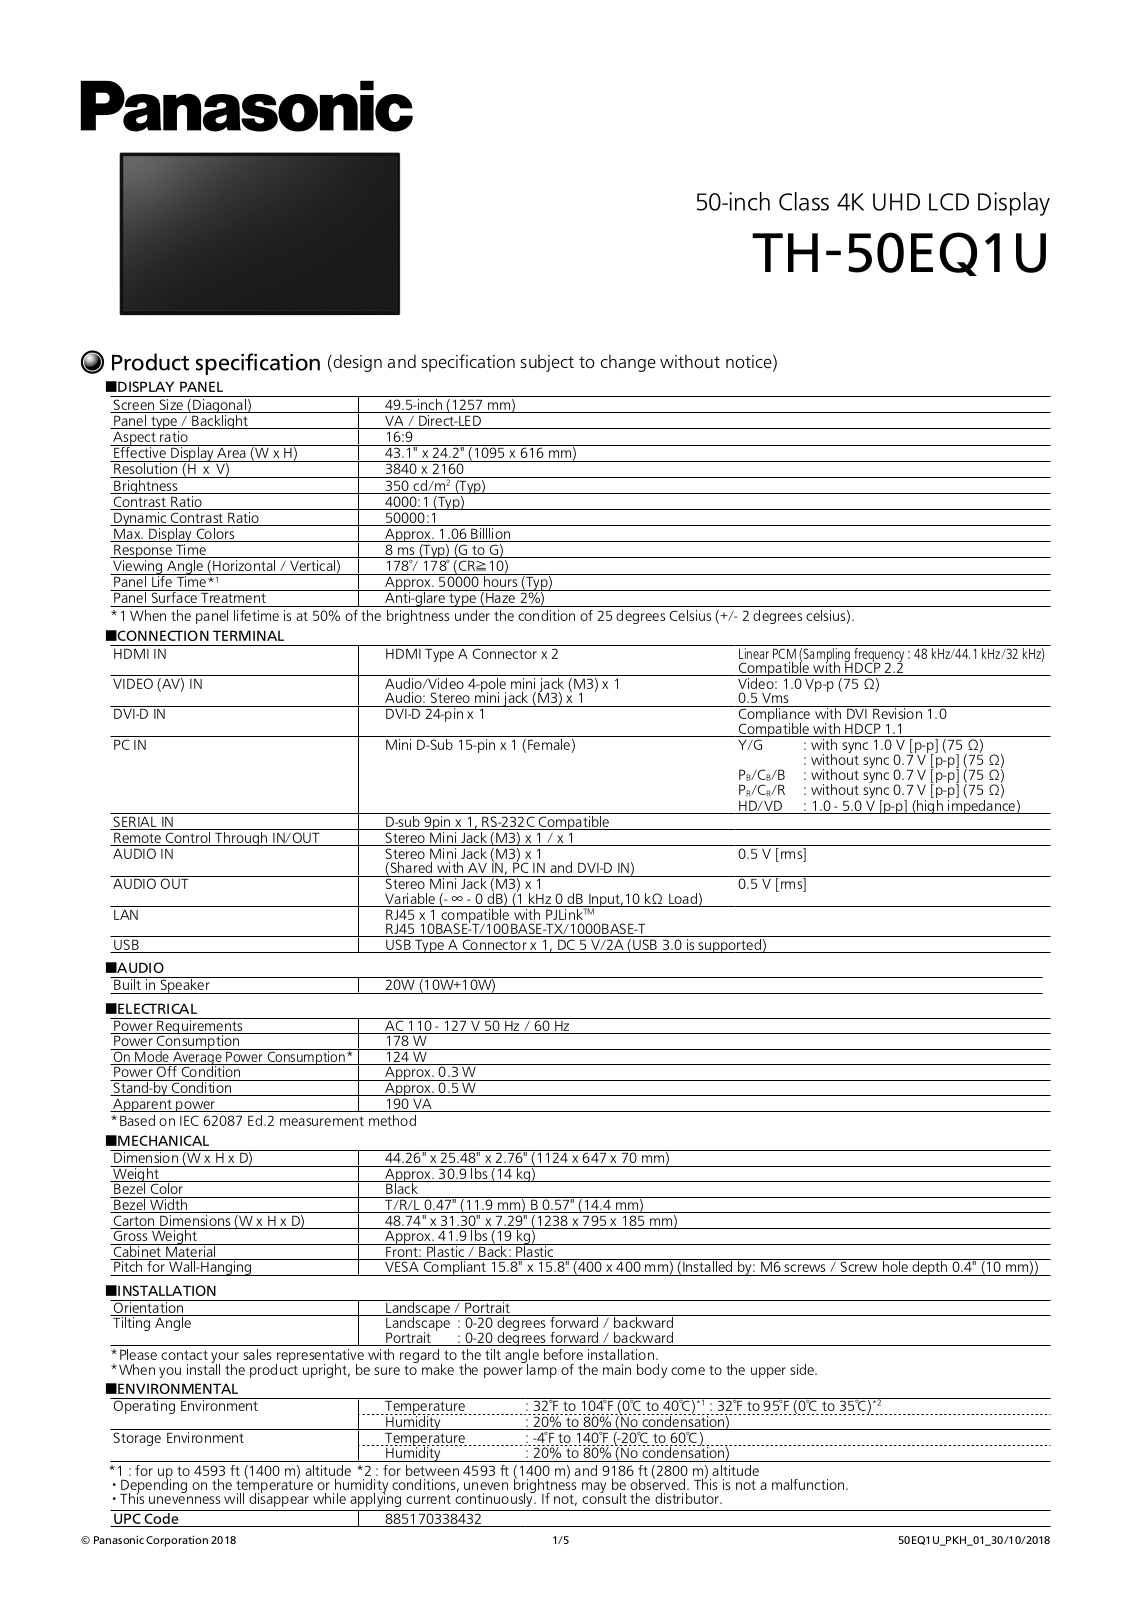 Panasonic TH-50EQ1U Specifications